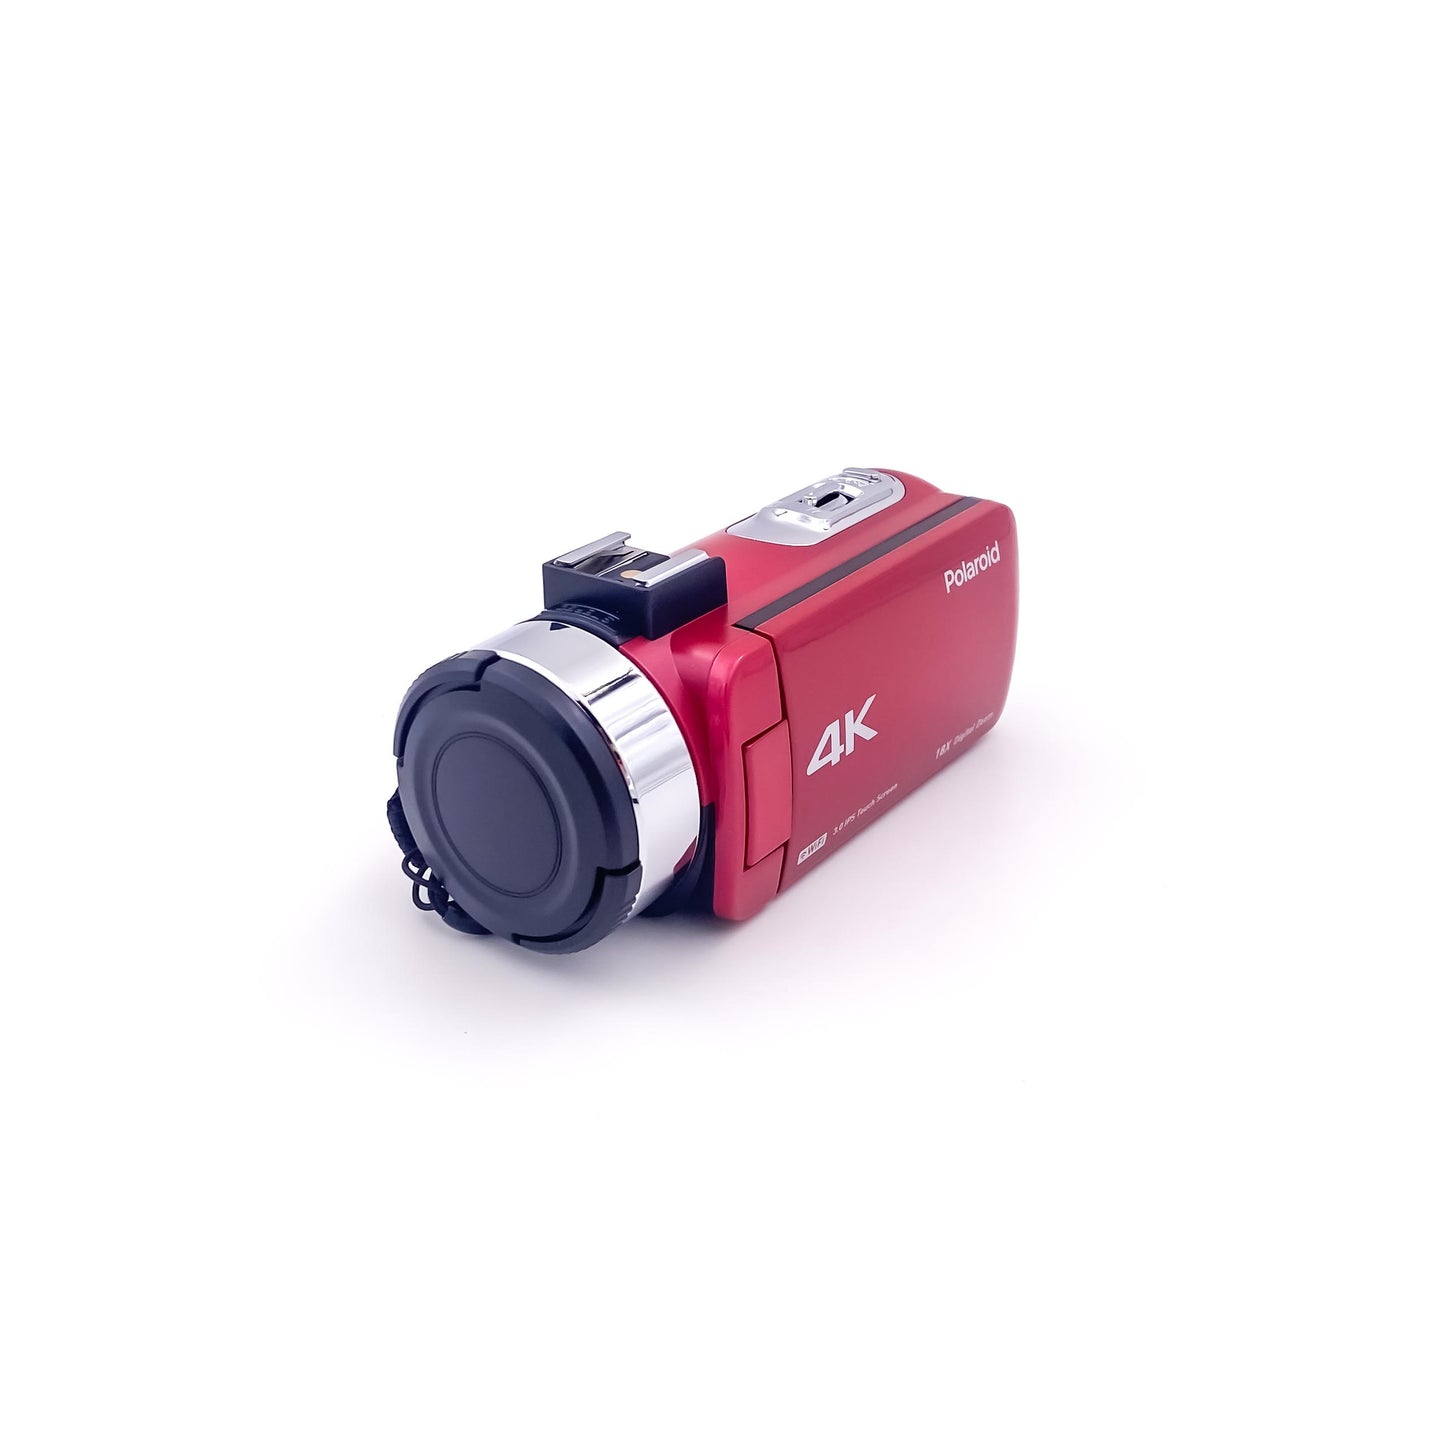 4k-digital-camcorder-id995hd-v1-burgundy-3